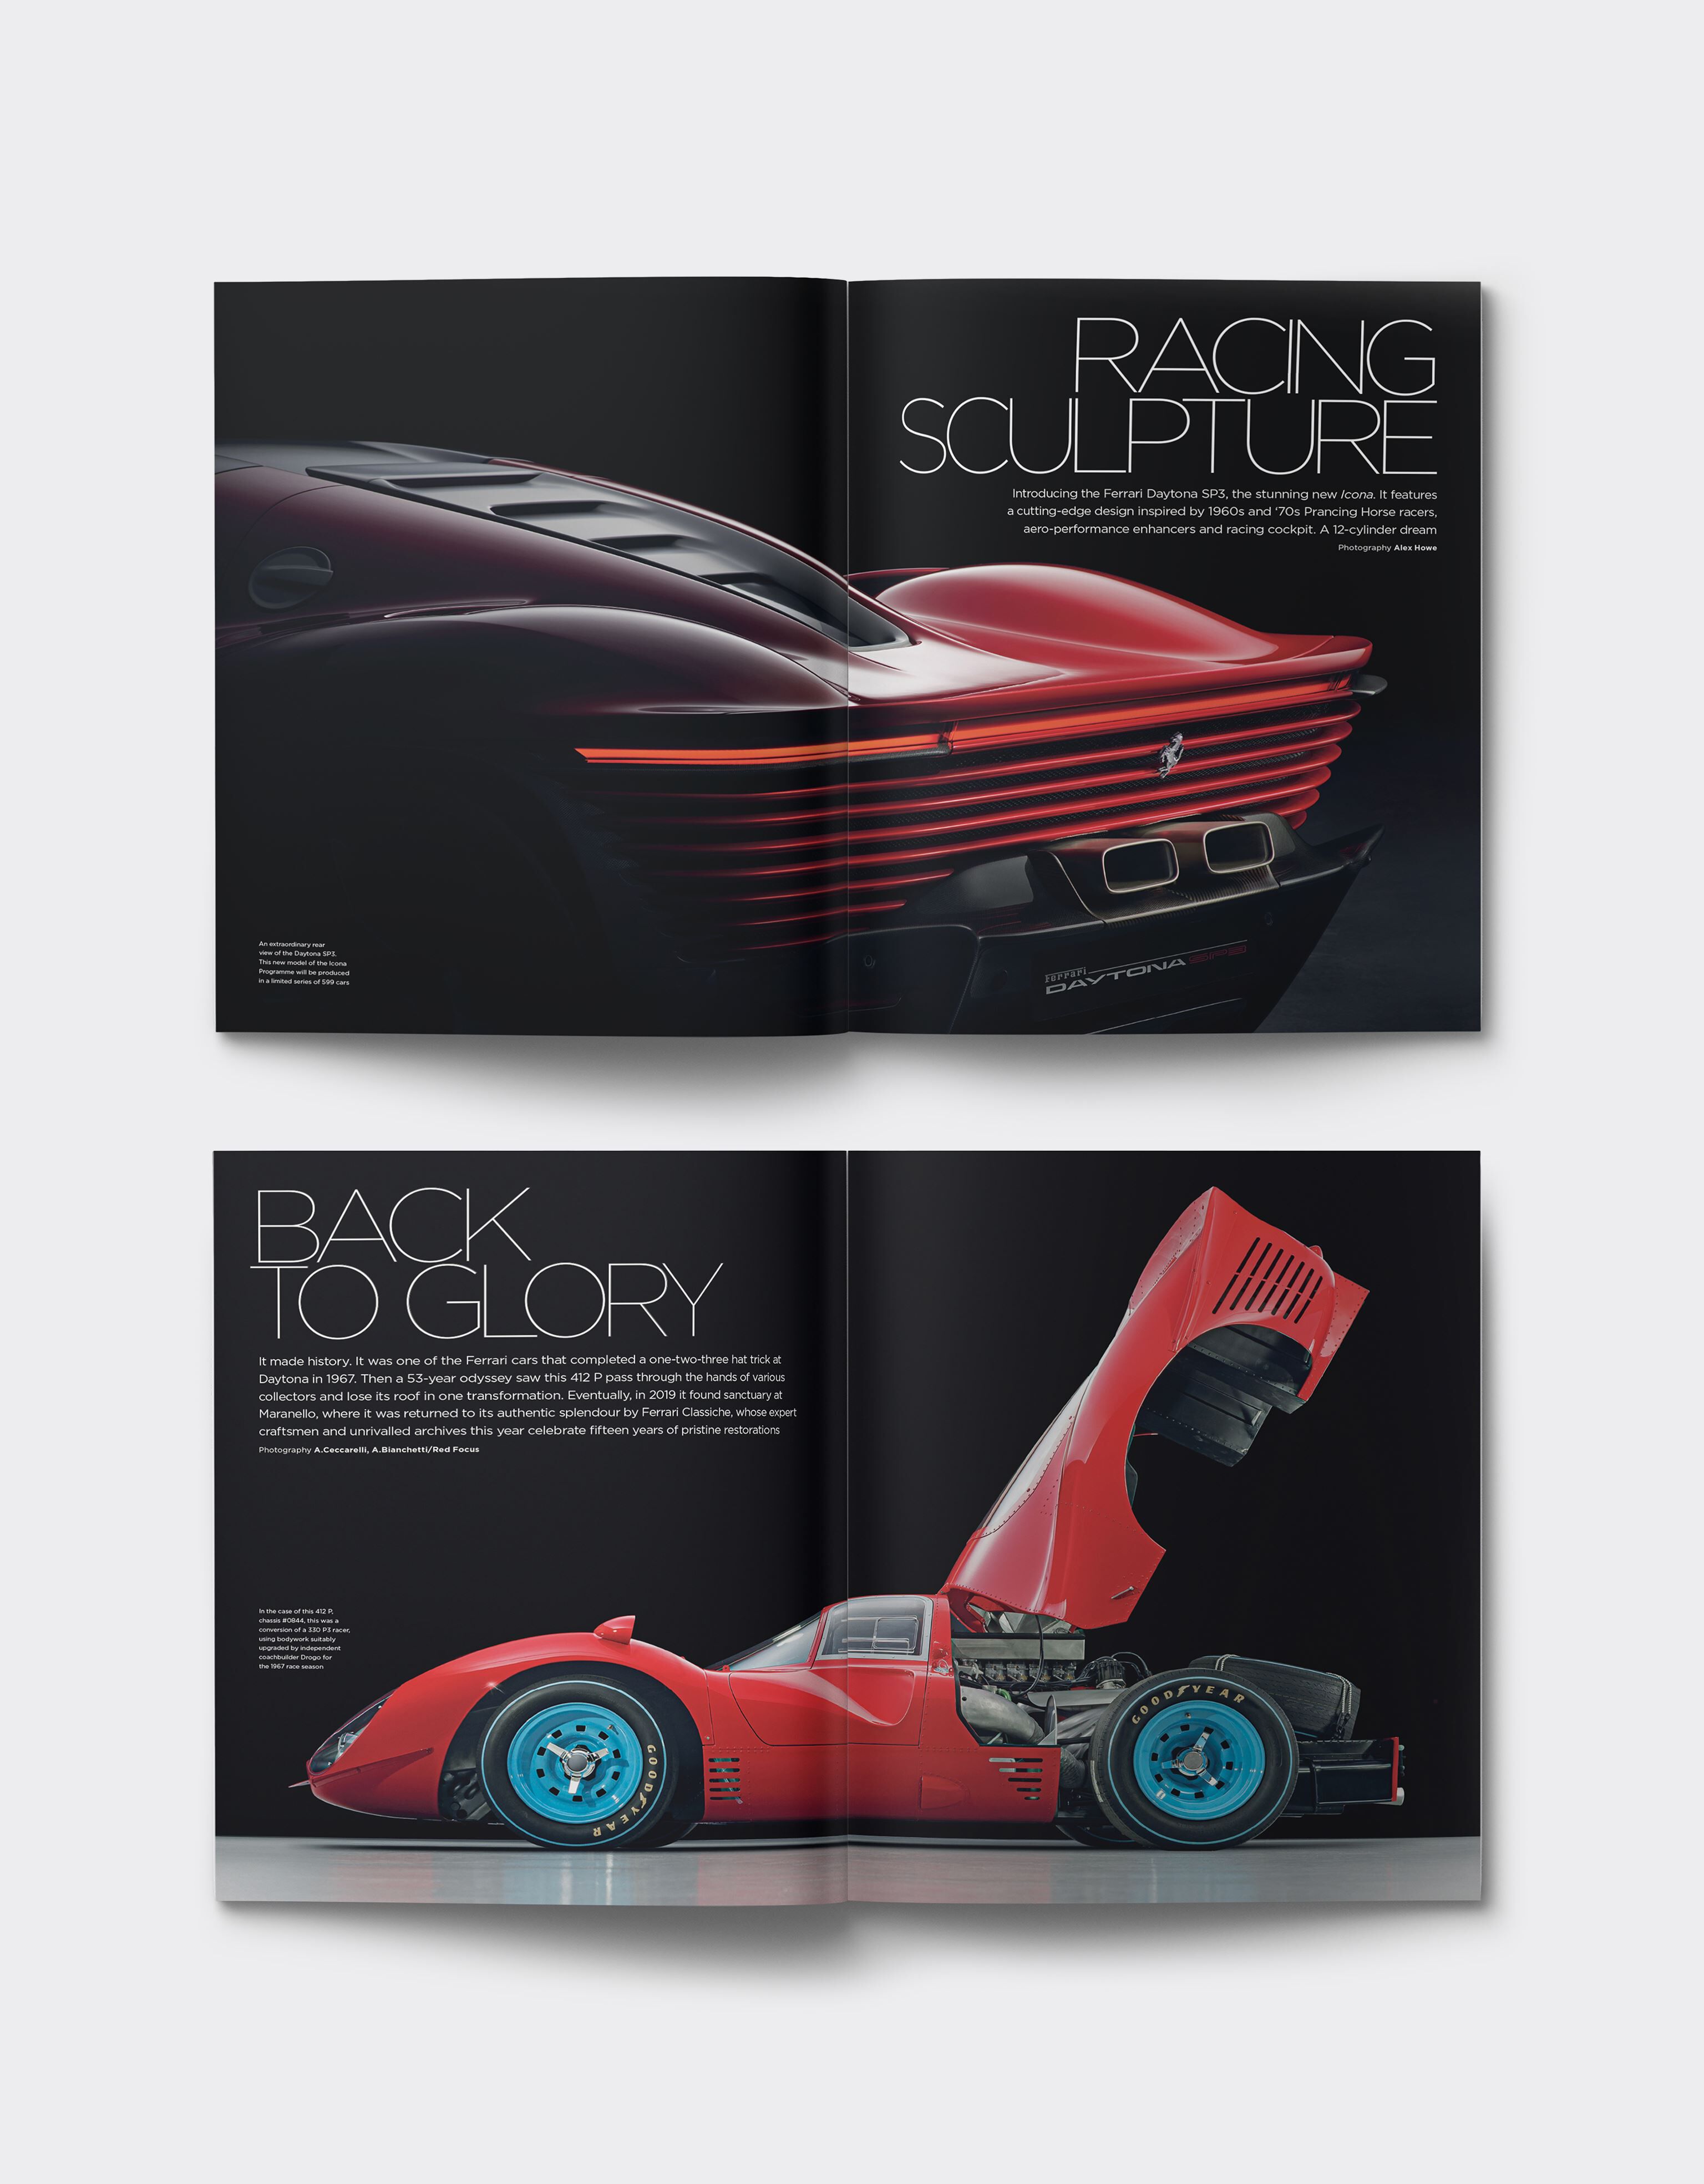 Ferrari The Official Ferrari Magazine Issue 53 - 2021 Yearbook 多色 47758f